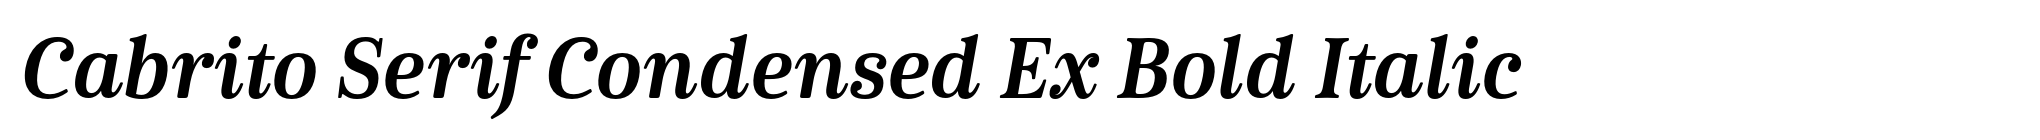 Cabrito Serif Condensed Ex Bold Italic image